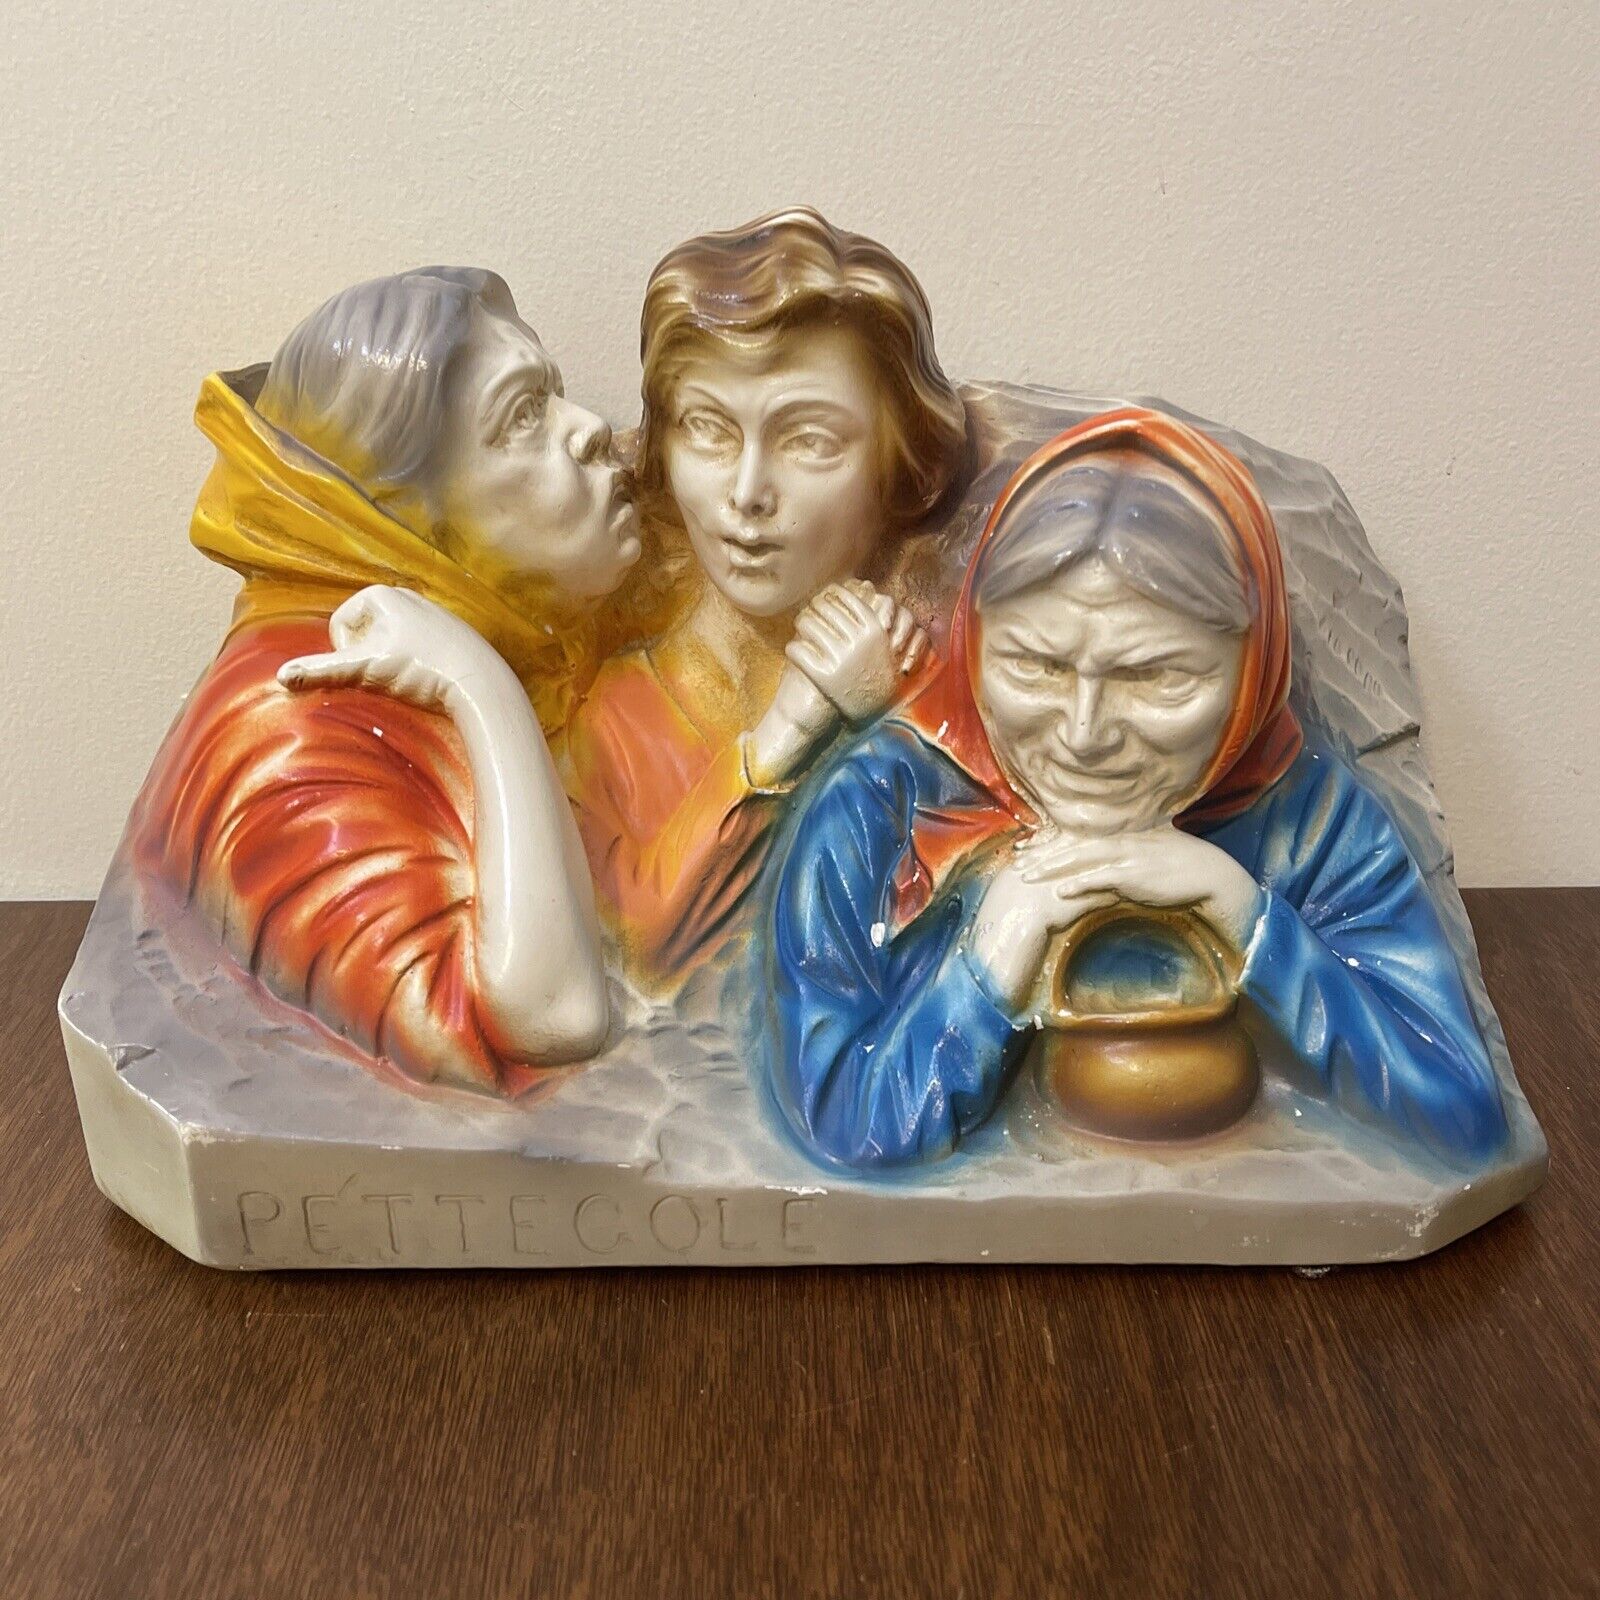 Vintage Antique Italian Pettegole “gossips” Women Ceramic Italy Sculpture Mother